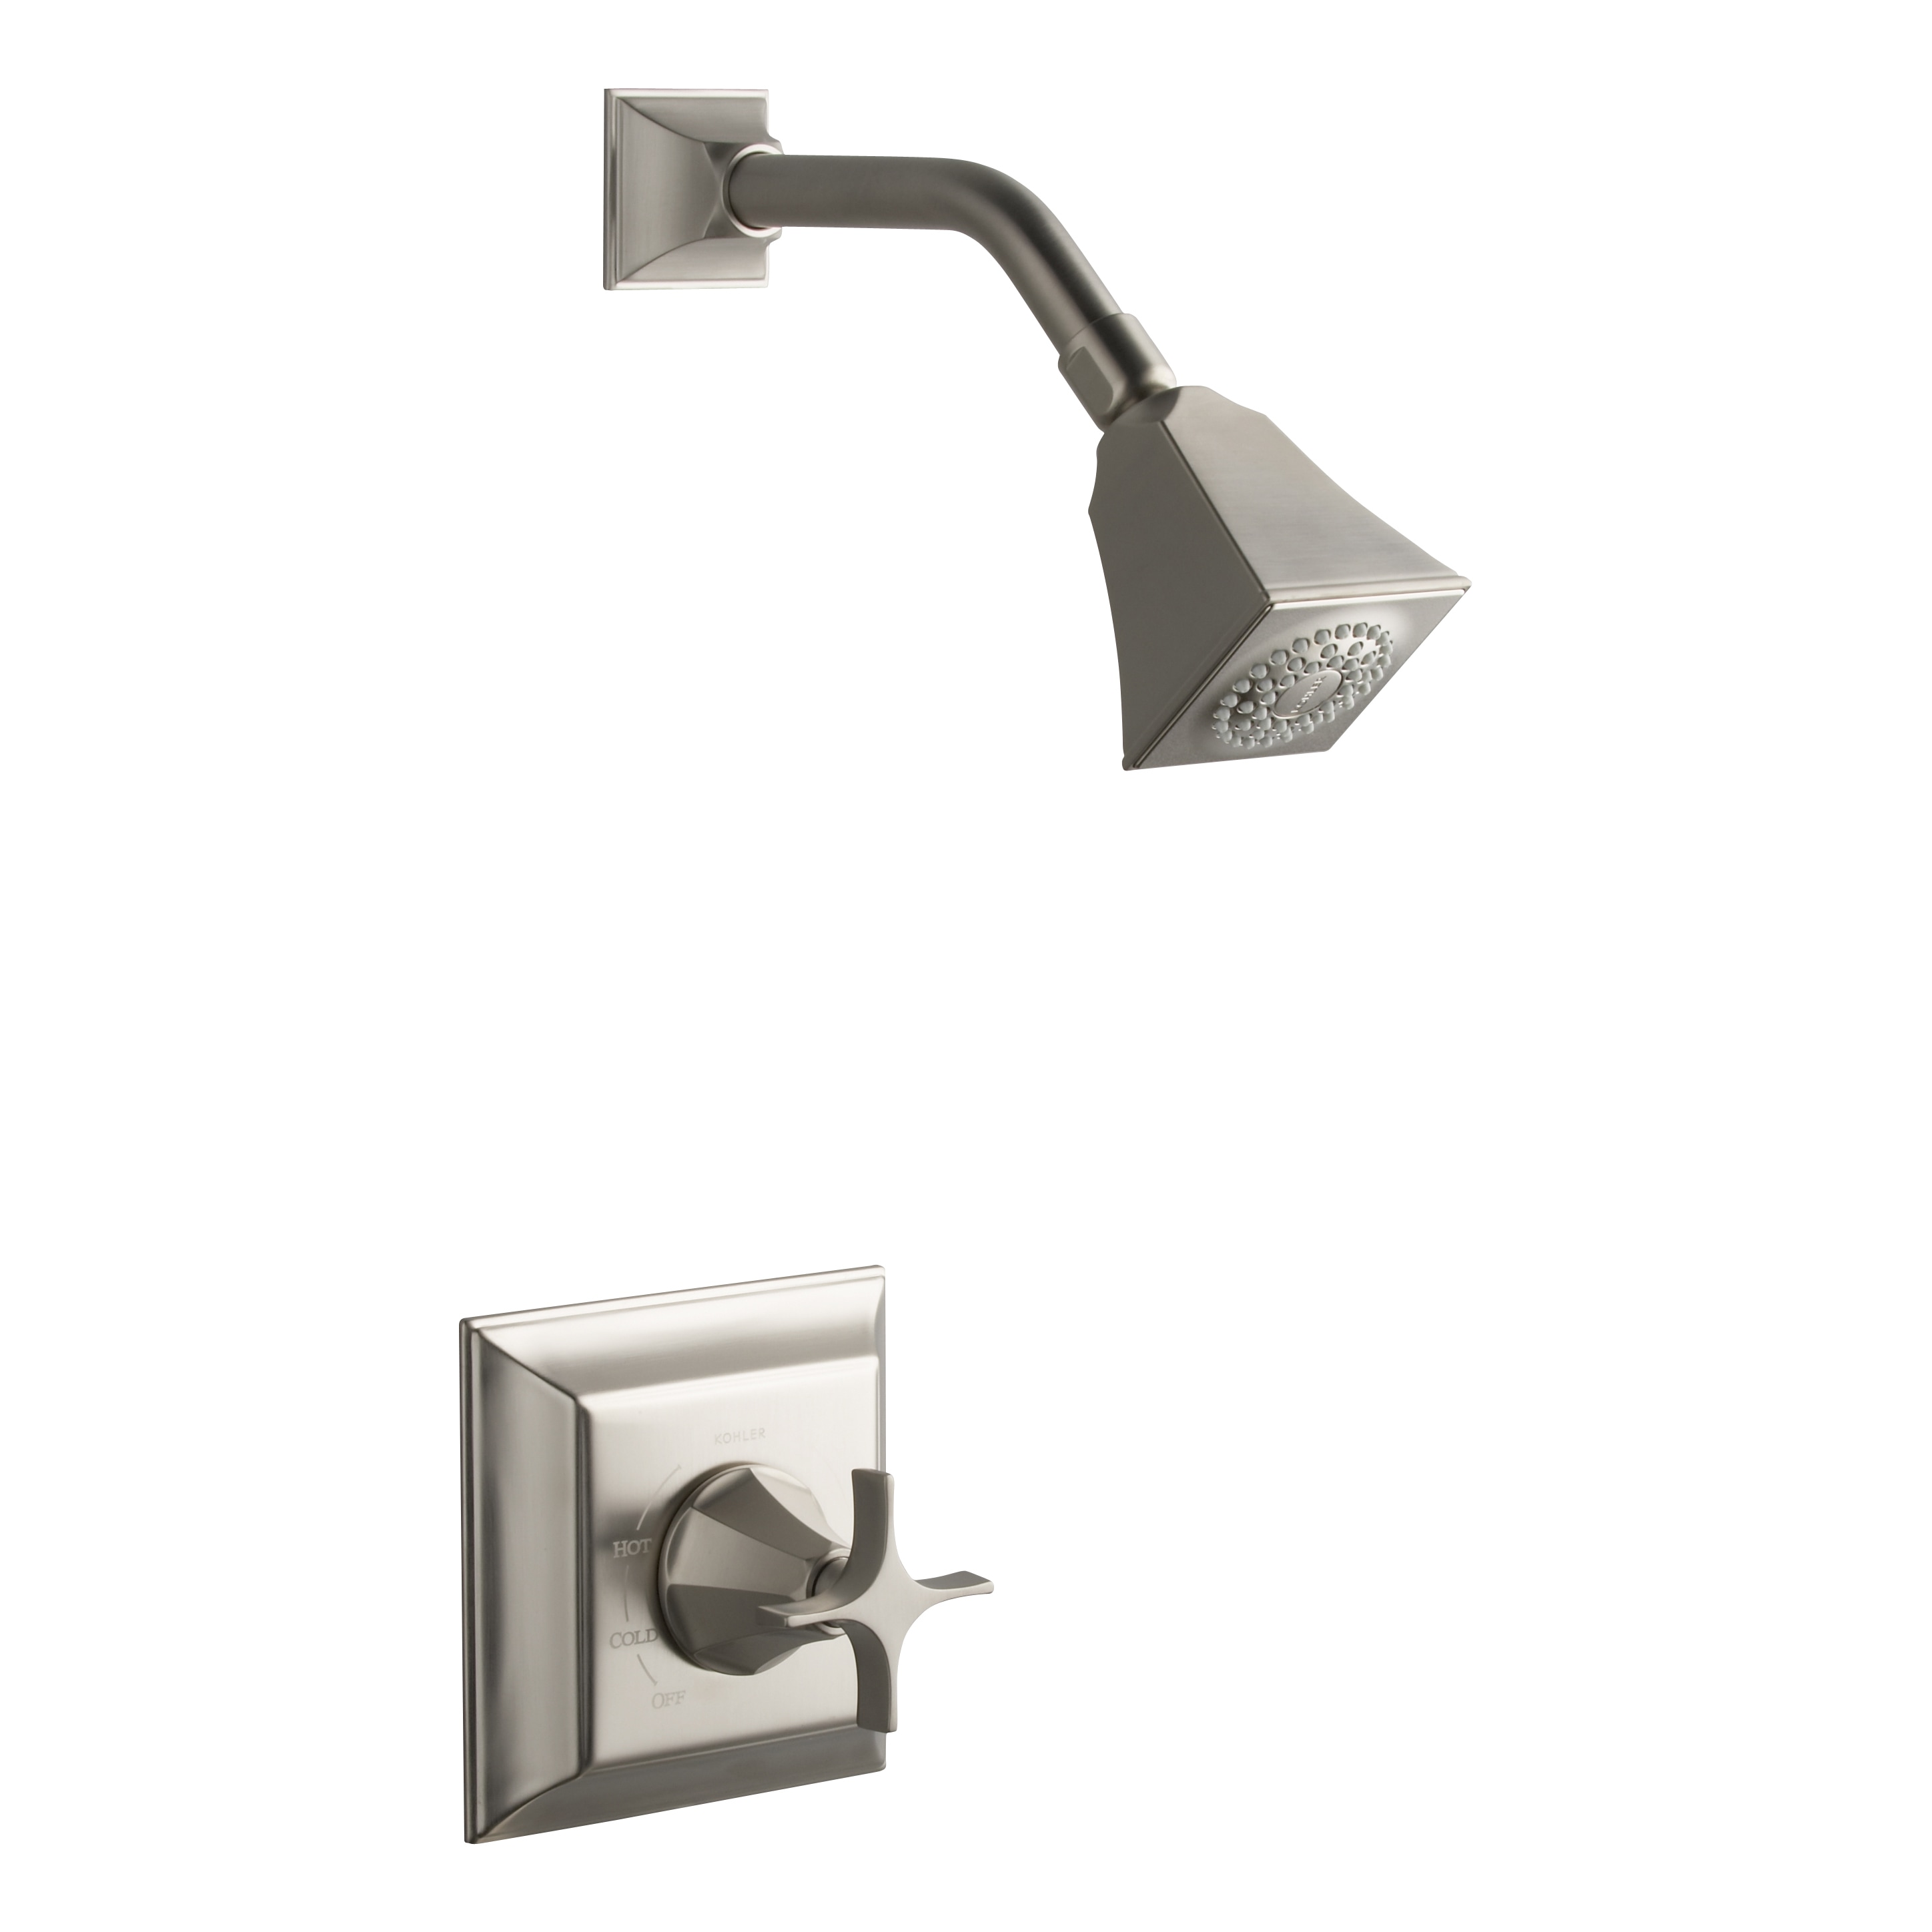 Kohler Memoirs Rite temp Pressure balancing Shower Faucet Trim With Stately Design And Cross Handle